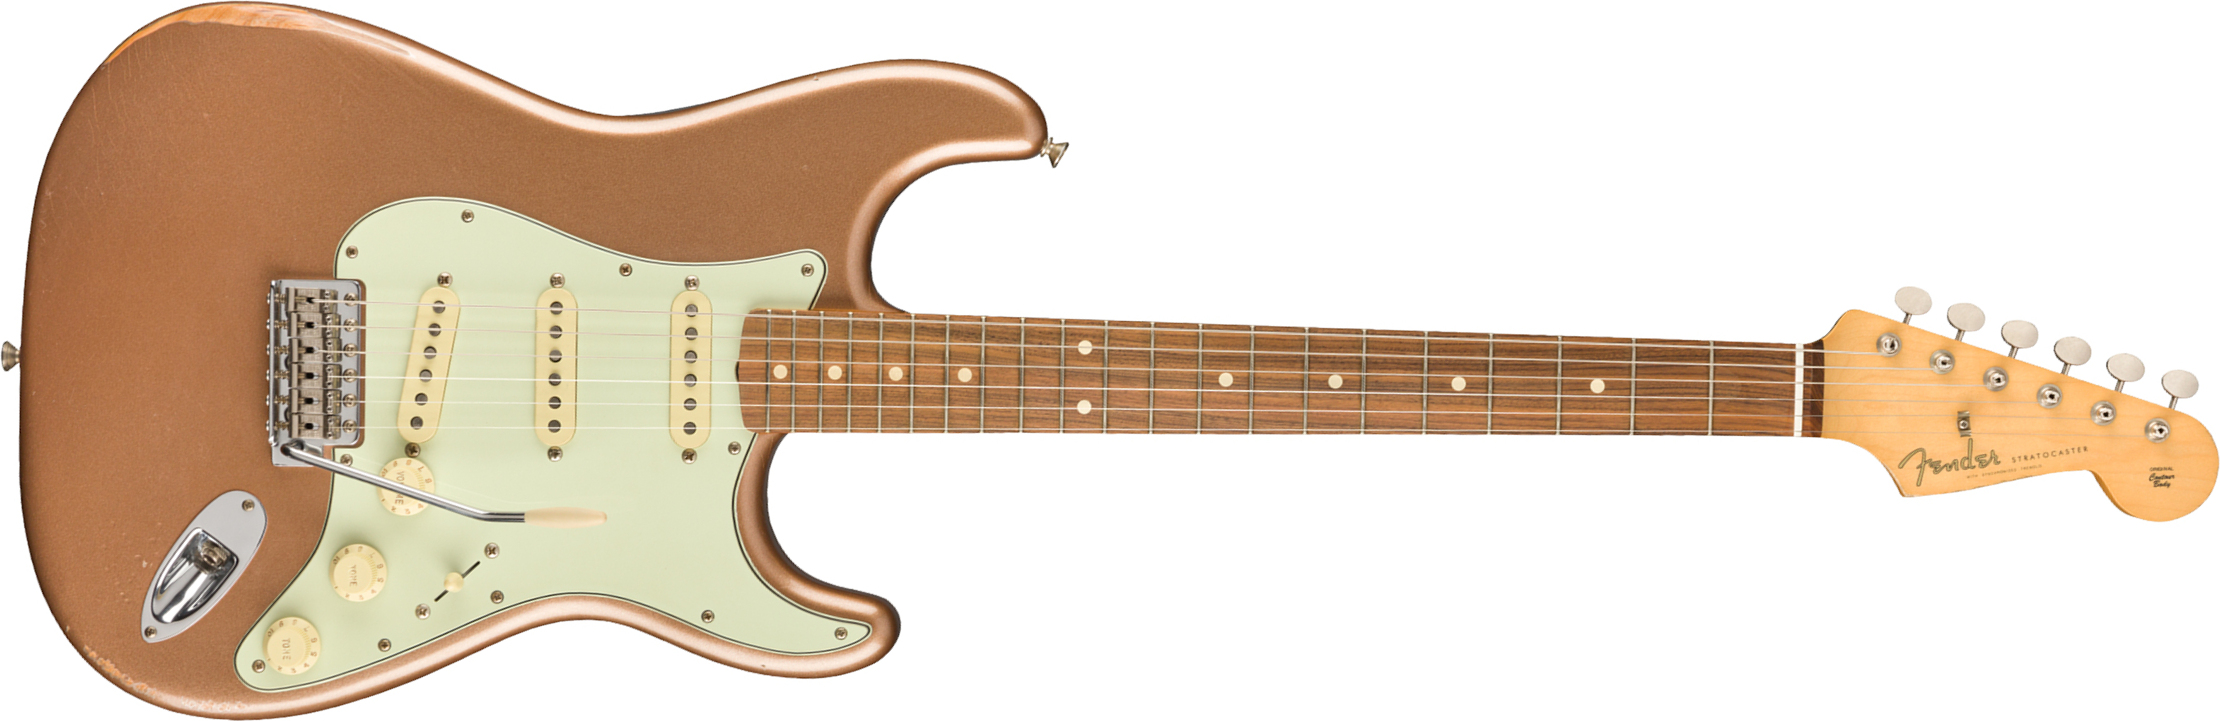 Fender Strat 60s Road Worn Mex Pf - Firemist Gold - Guitarra eléctrica con forma de str. - Main picture